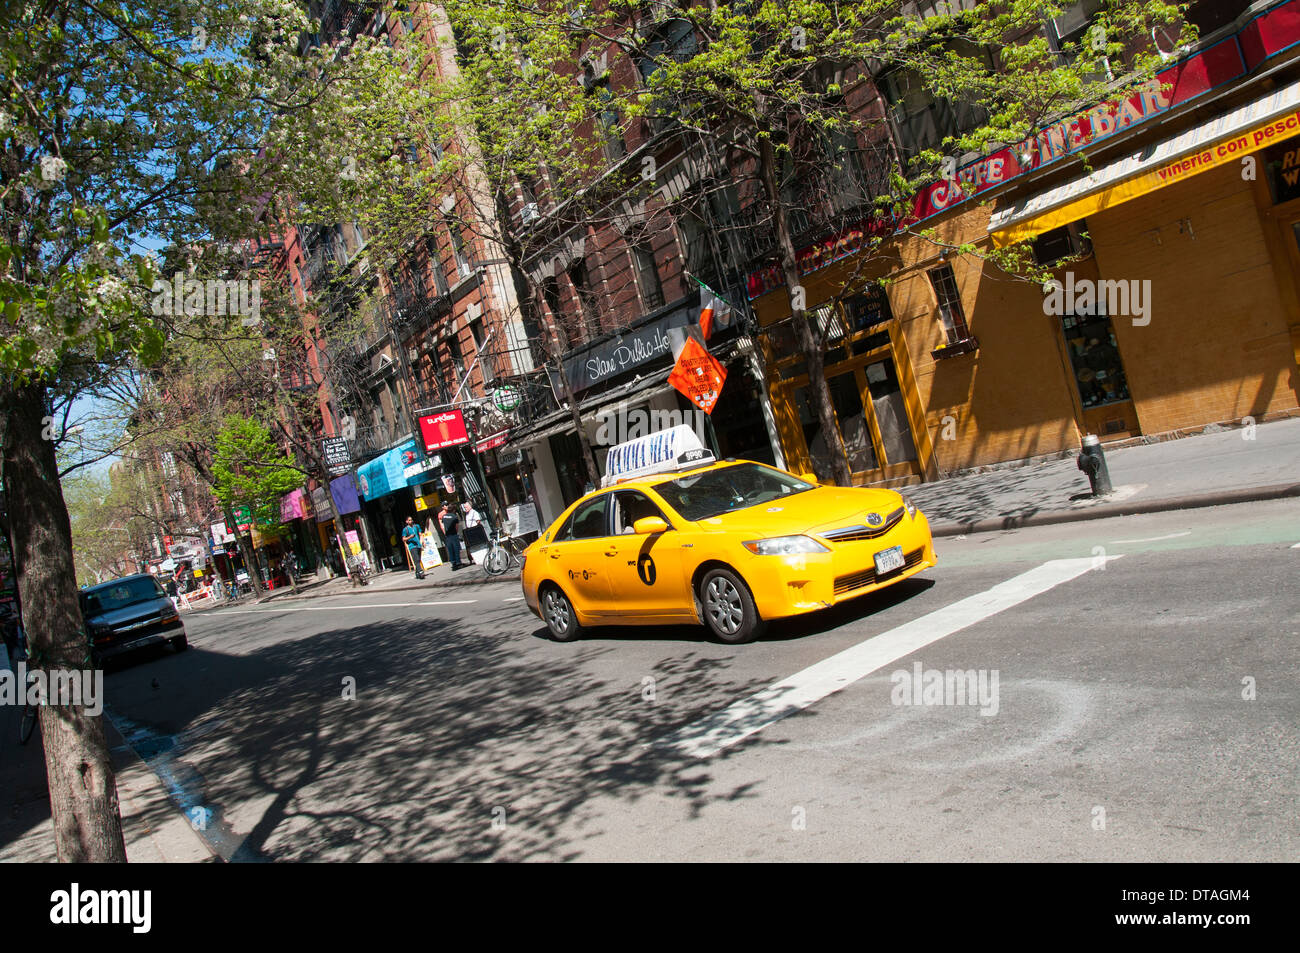 A yellow cab driving through Greenwich Village in Manhattan New York City, USA Stock Photo